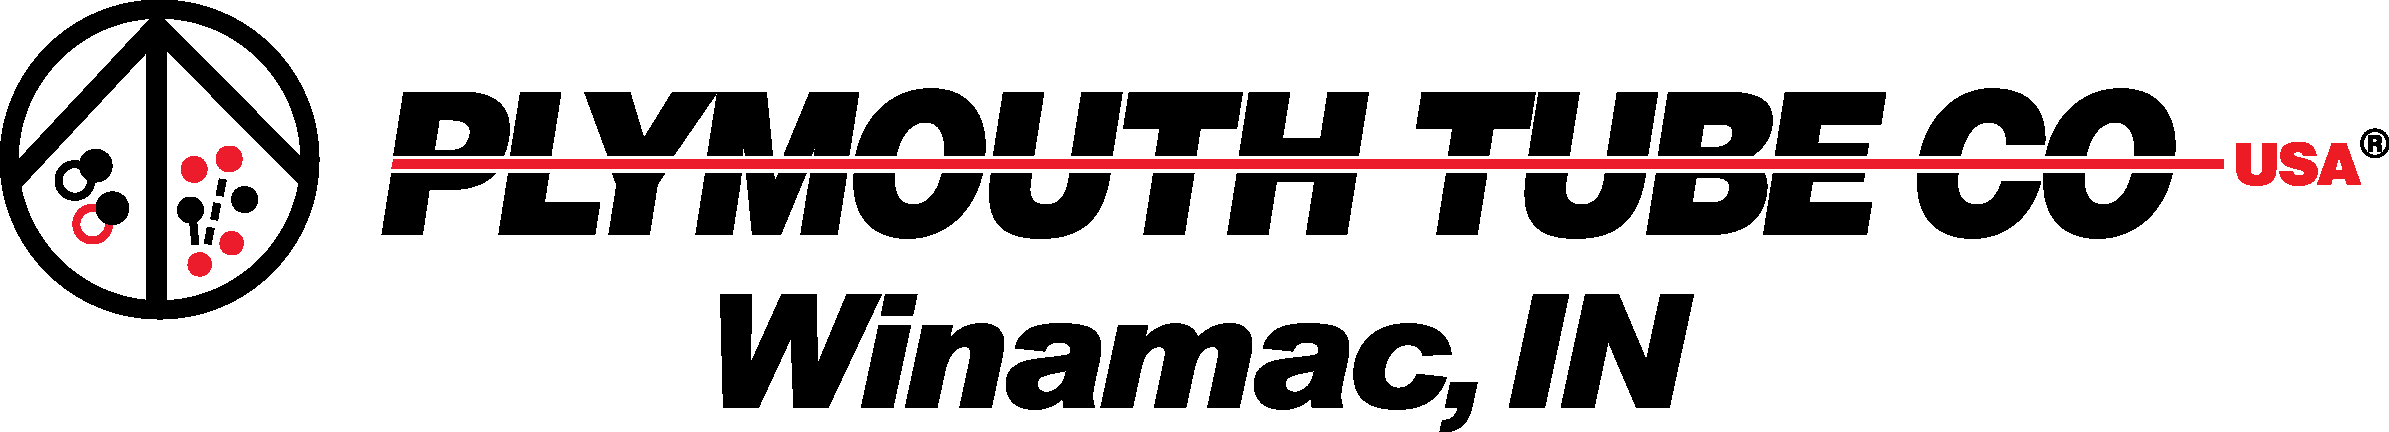 Plymouth Tube logo